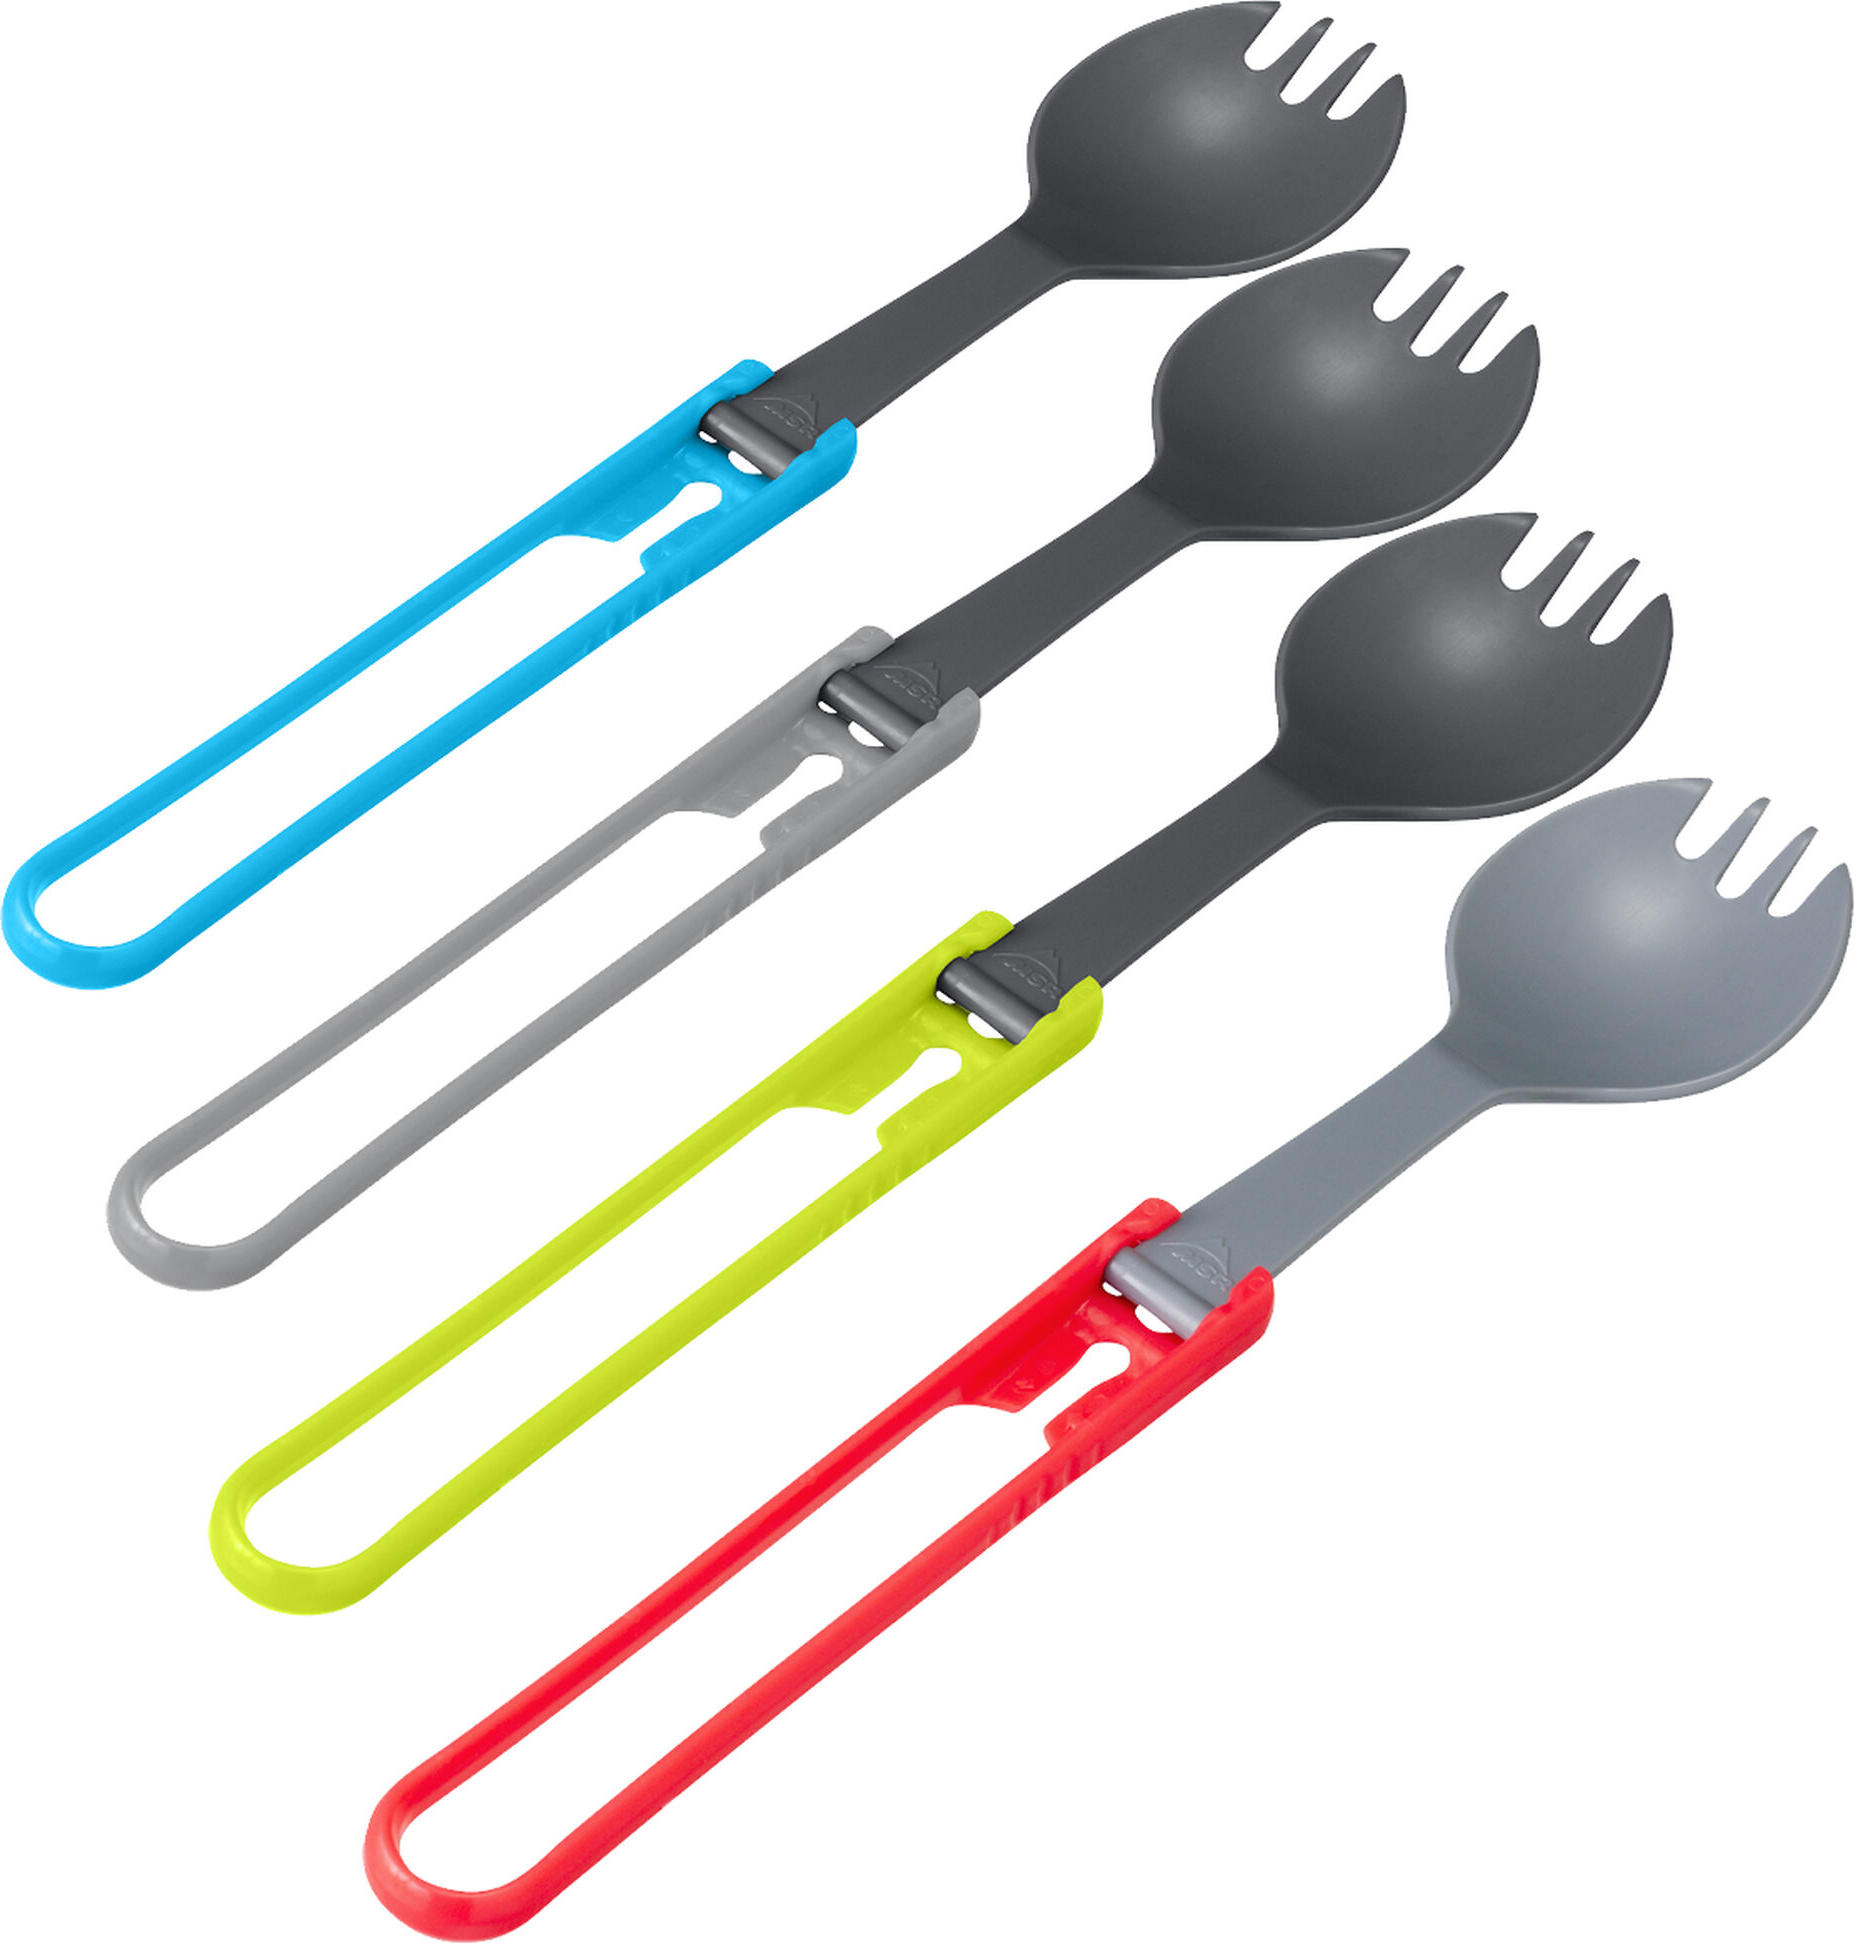 MSR Folding Spoon & Fork Kit, 4pc red, gray